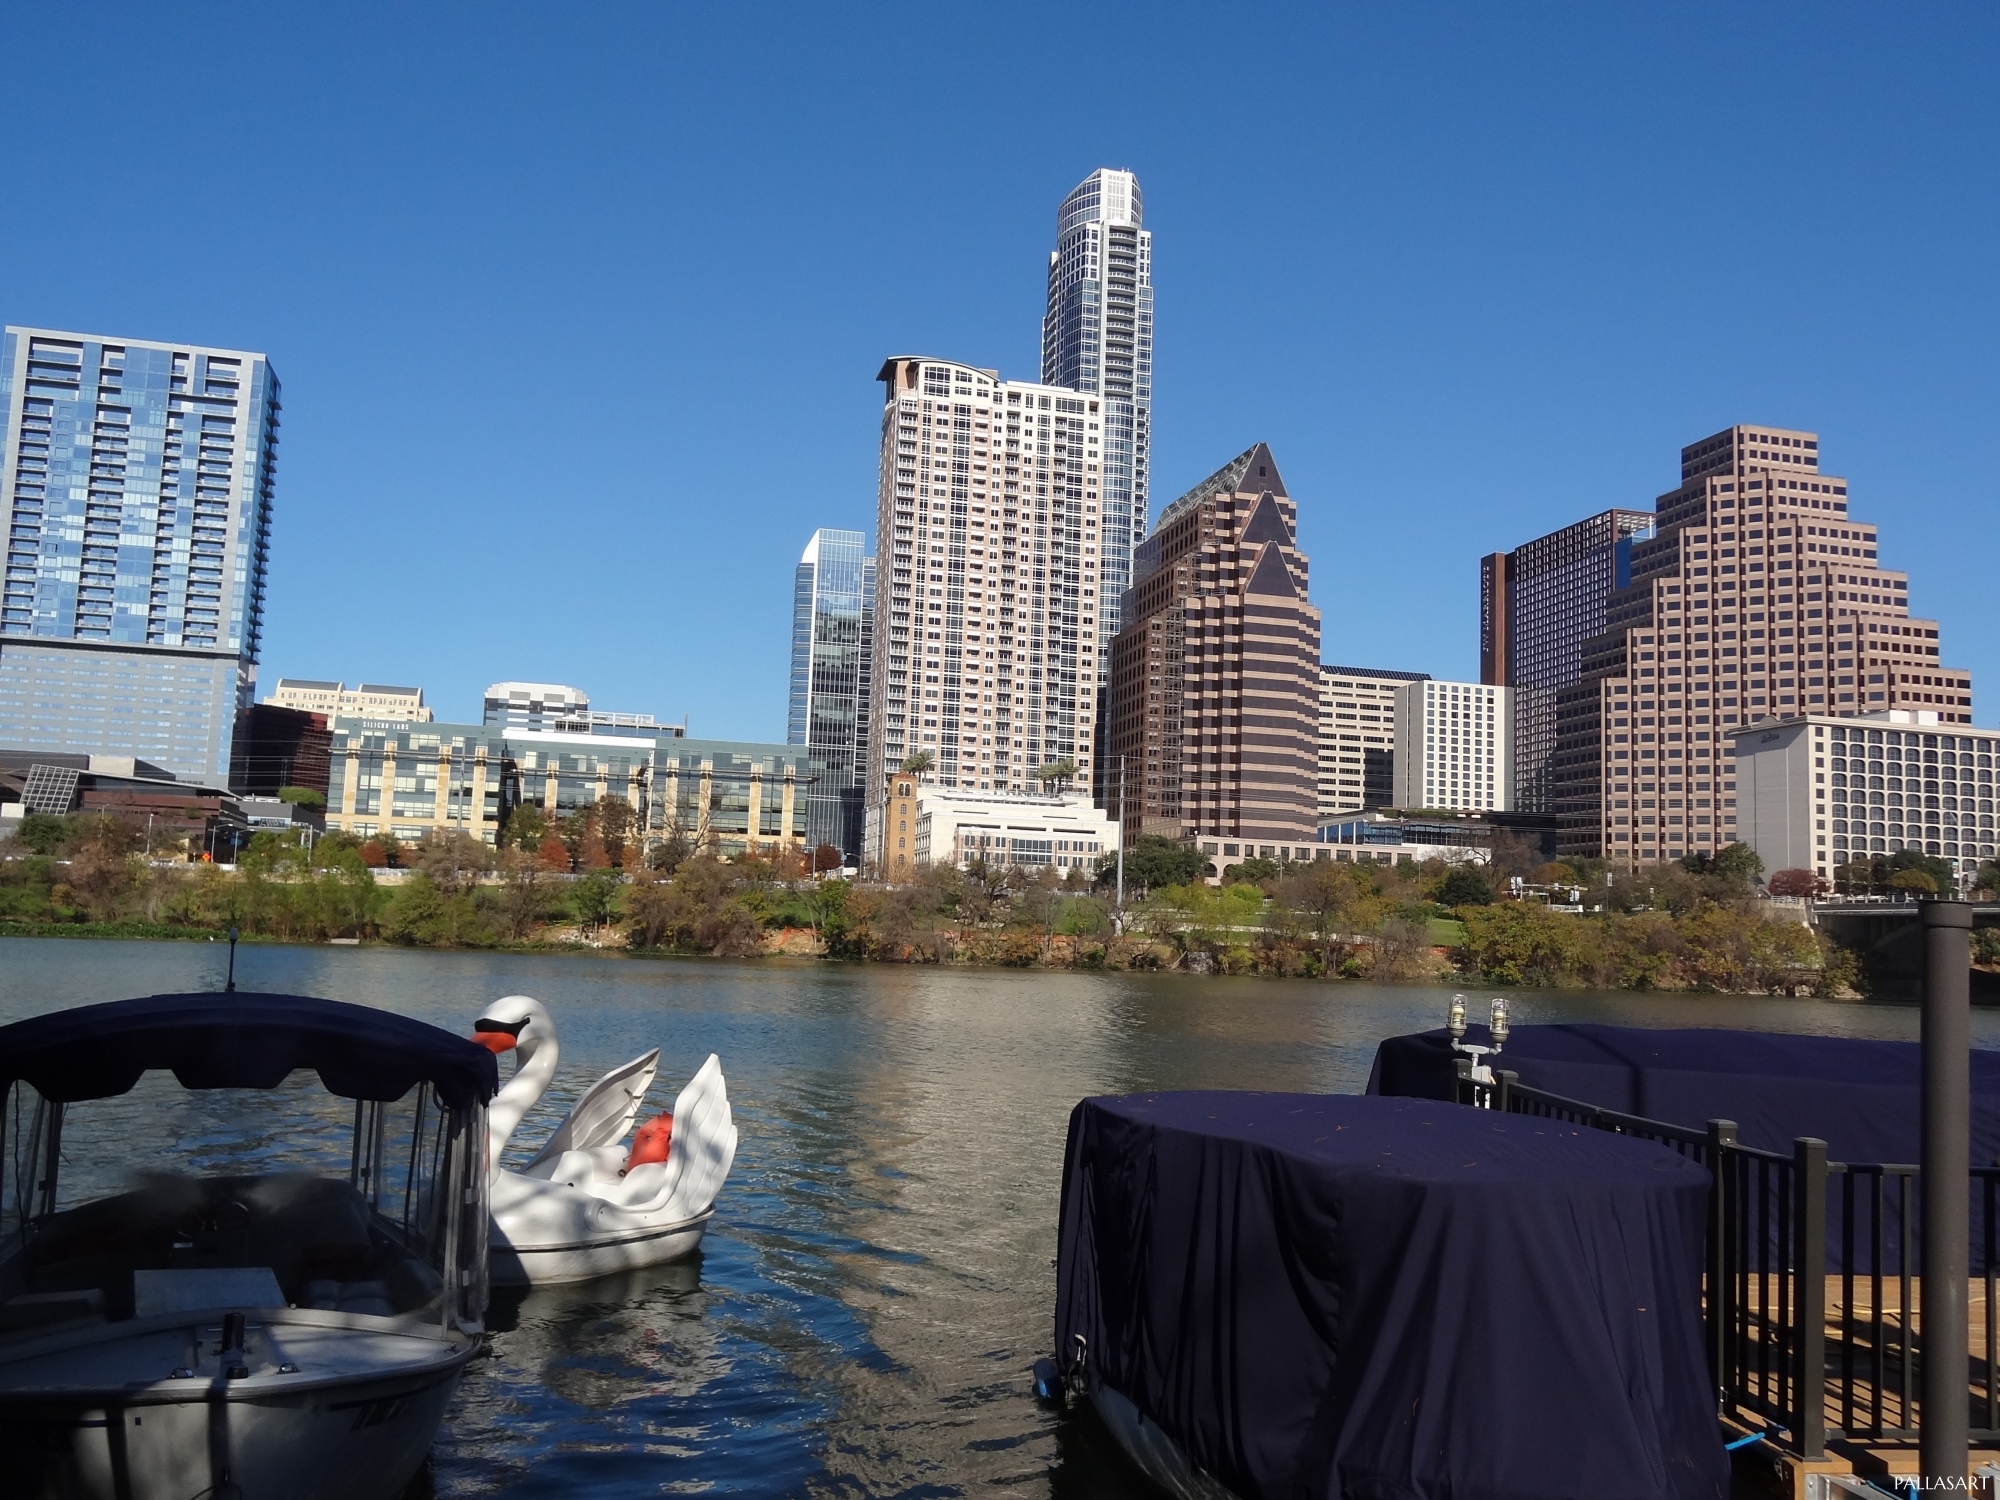 Swan pedal boat in Austin, Texas 